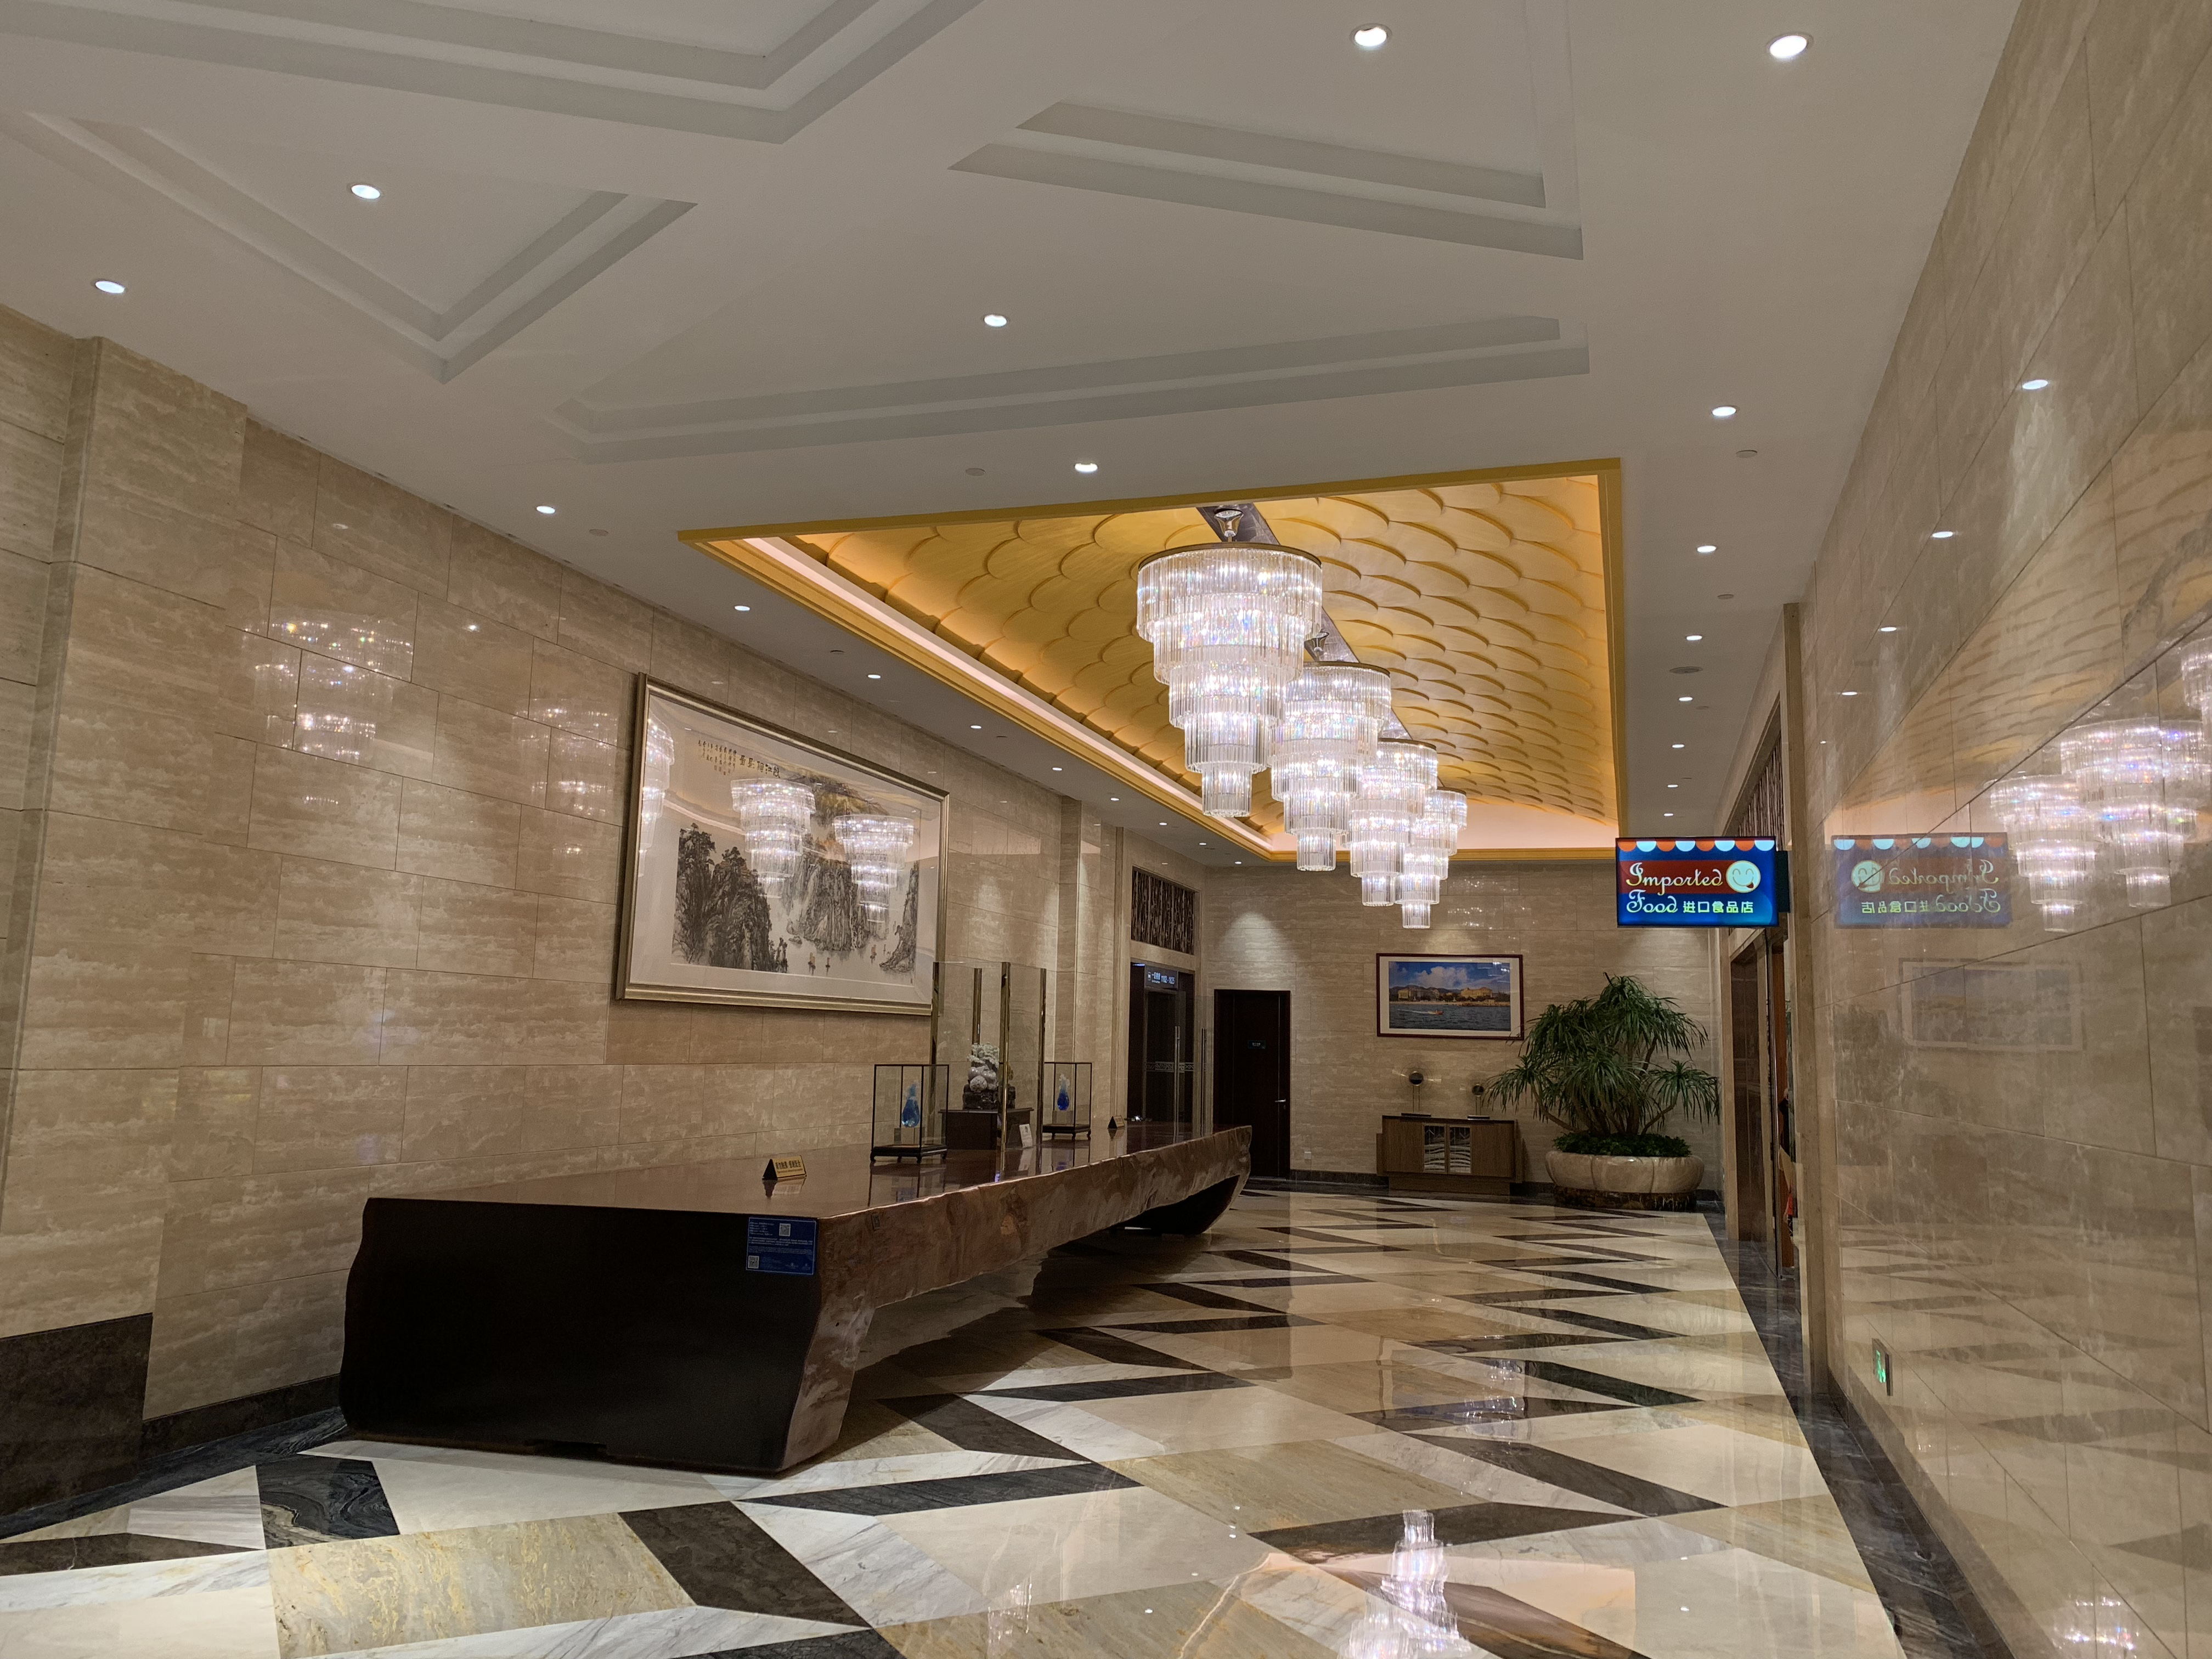 The Lighting environment in luxury hotel lobby